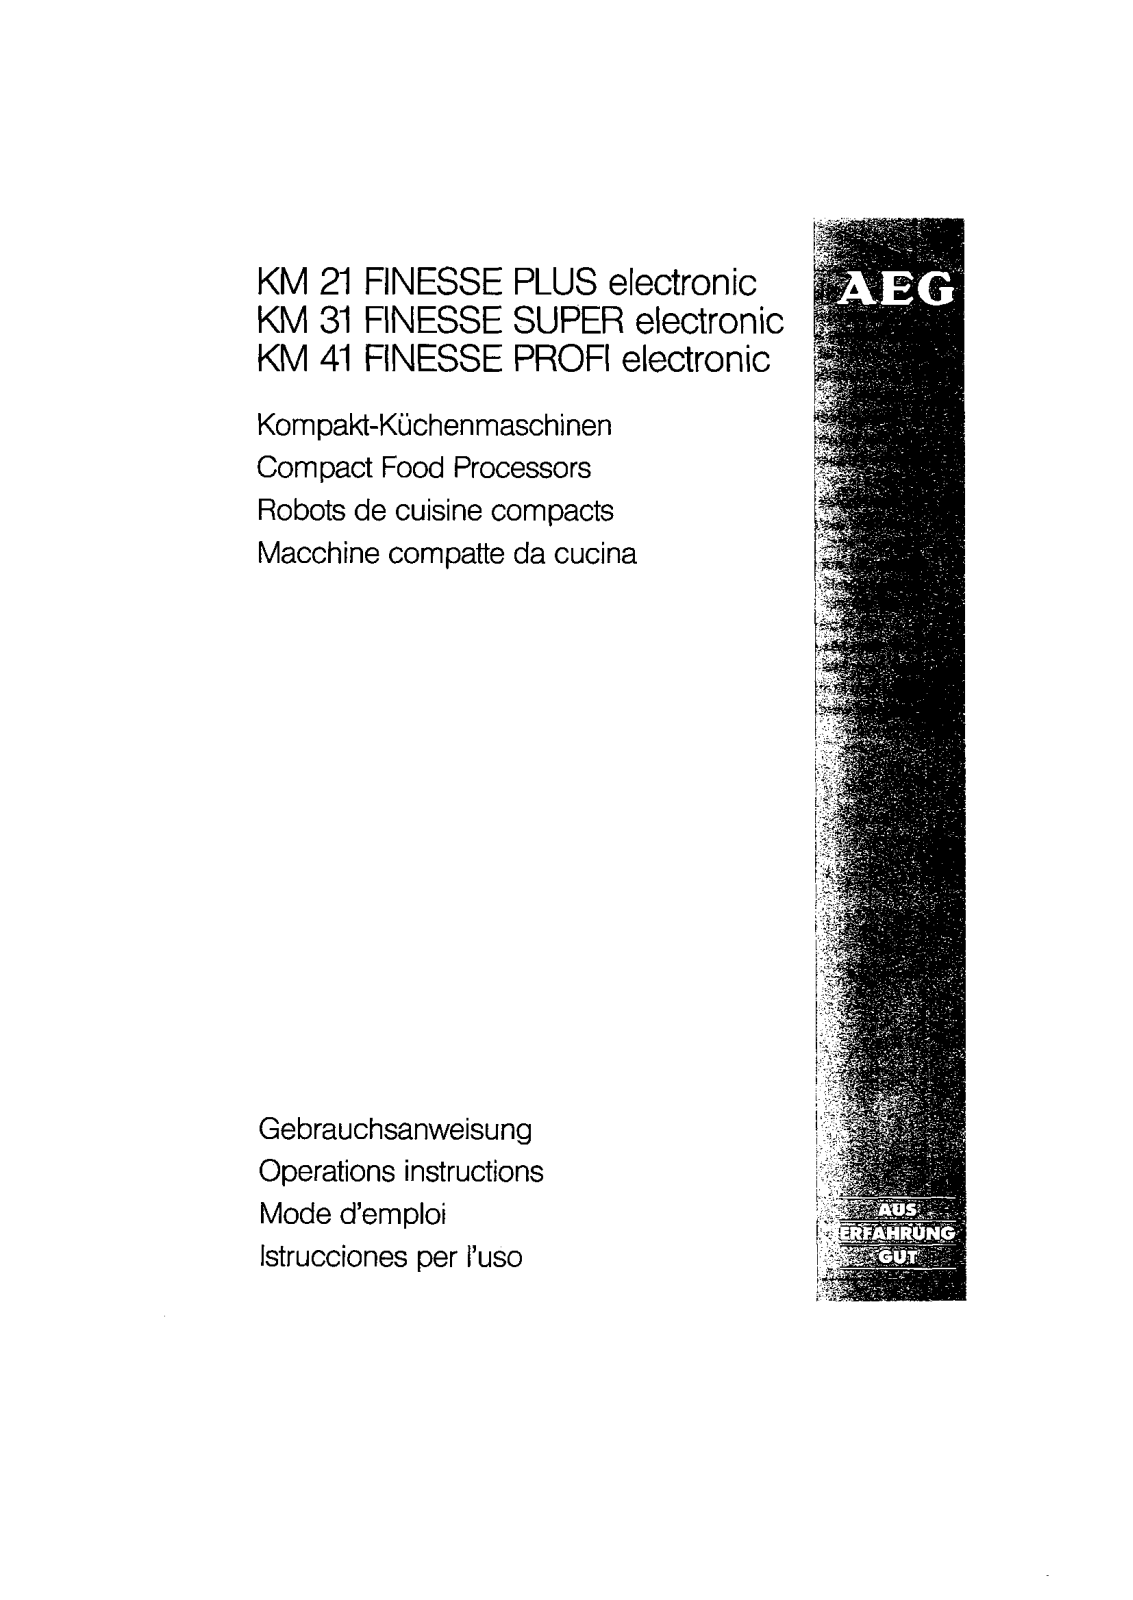 AEG-Electrolux FINESSEPLUSKM21 User Manual